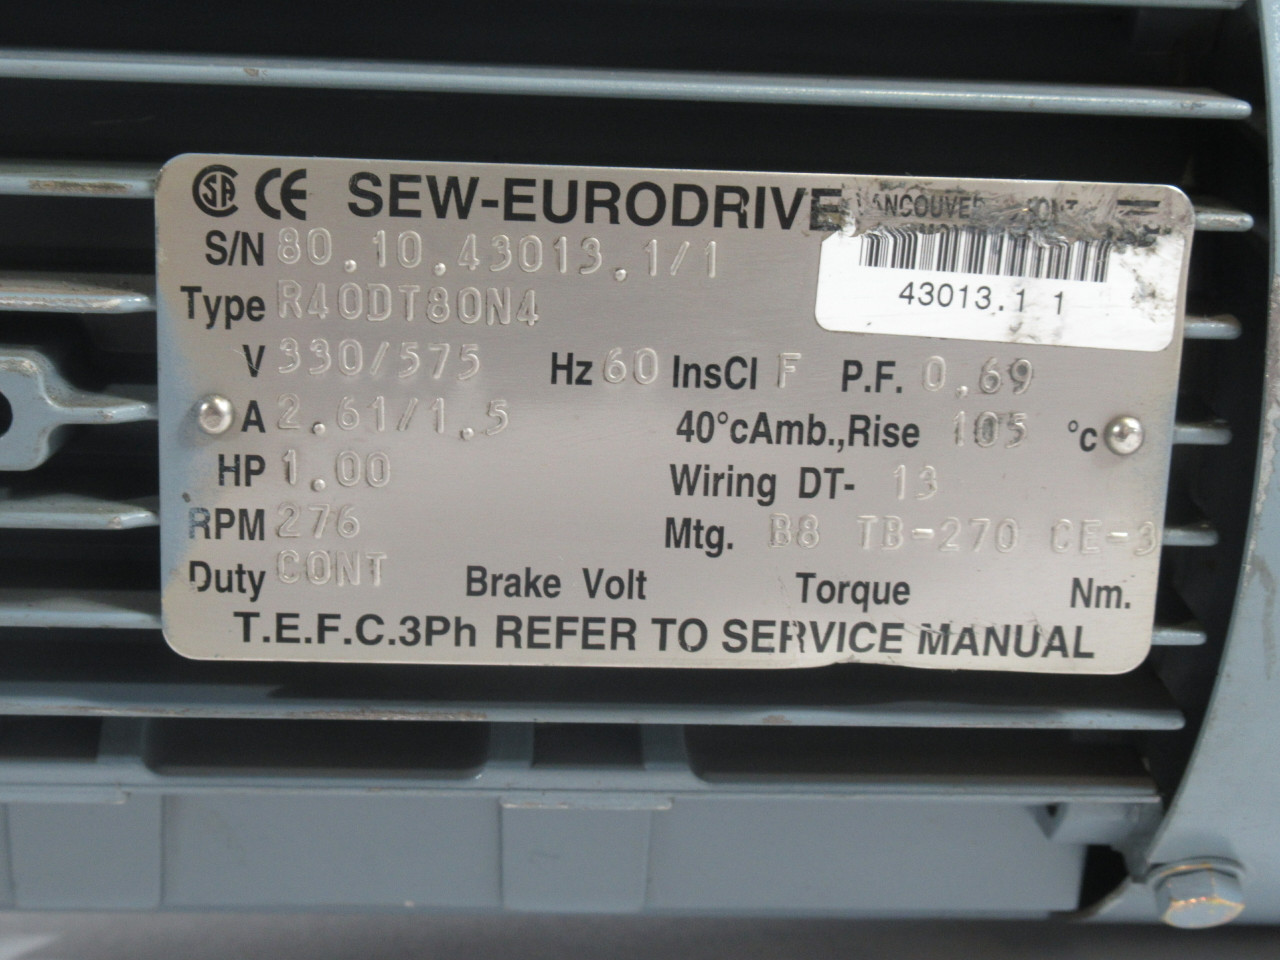 Sew-Eurodrive 1HP 276RPM 330/575V TEFC C/W Gear Reducer 6.17:1 Ratio USED